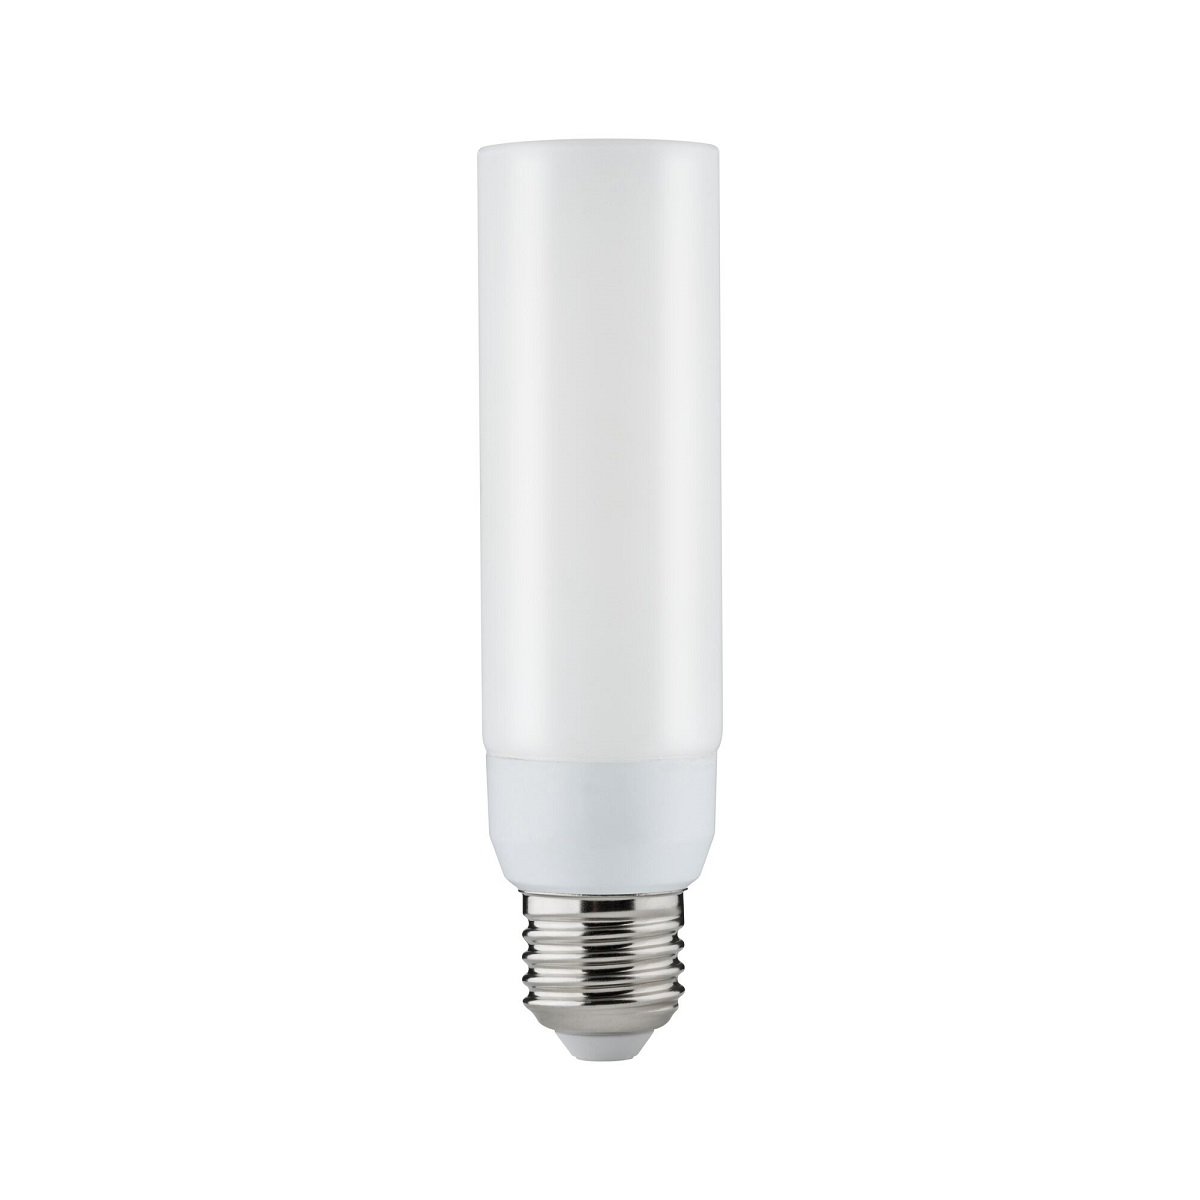 Paulmann 29059 Standard Lampen Shop E27 satin & Leuchten online dimmbar im Deco LED Pipe 2700K kaufen 230V 